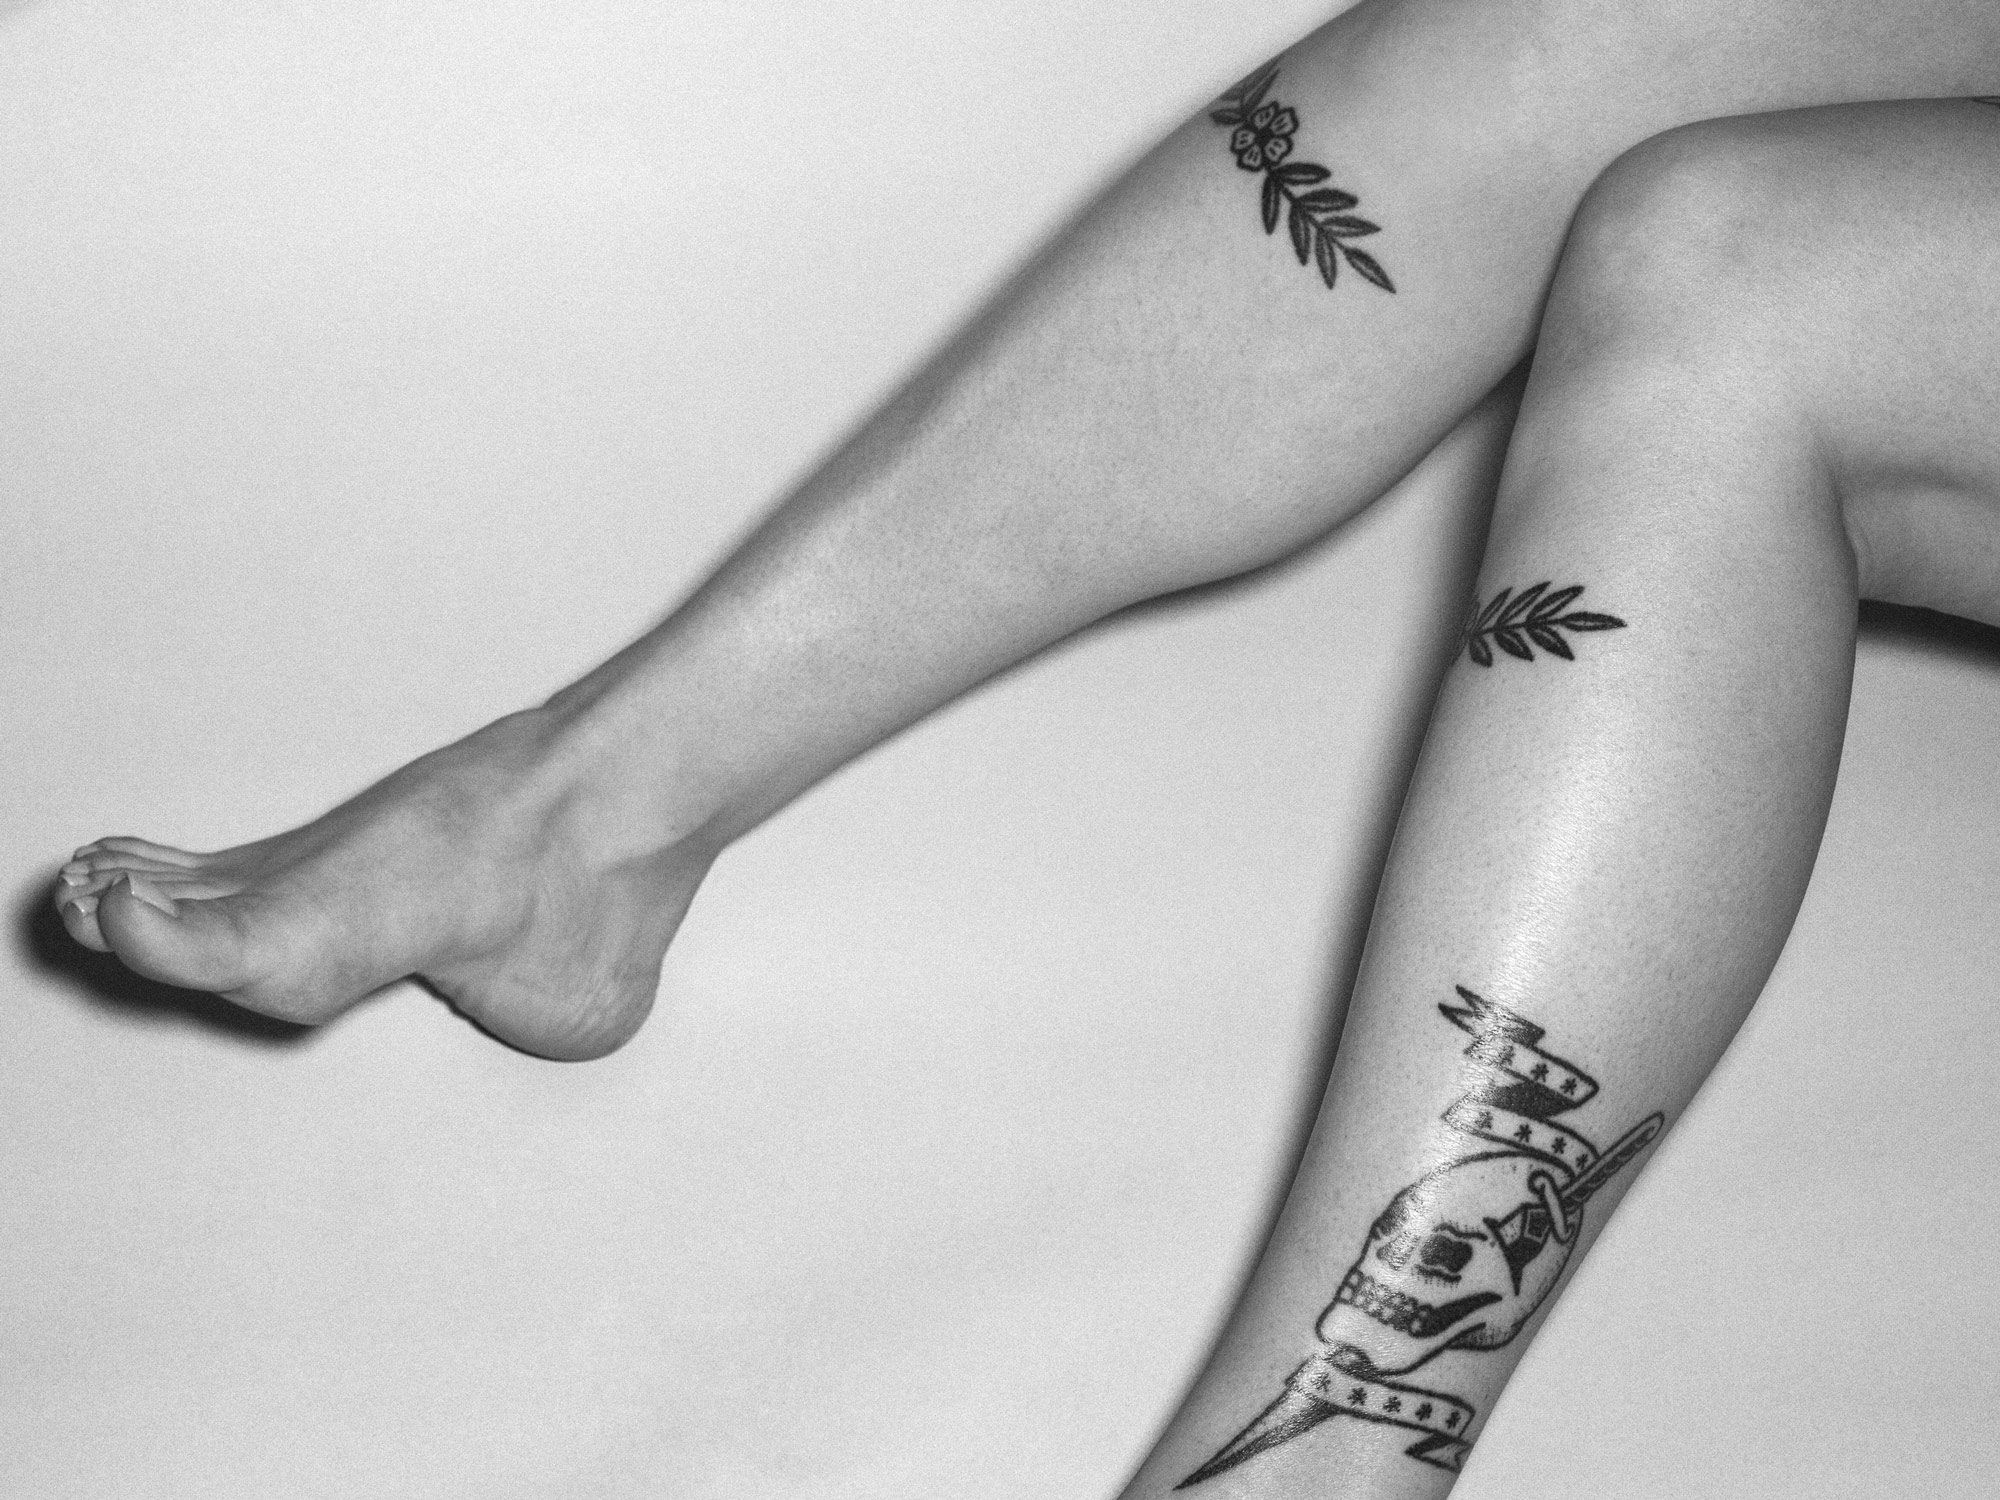 Tattoos on woman's legs